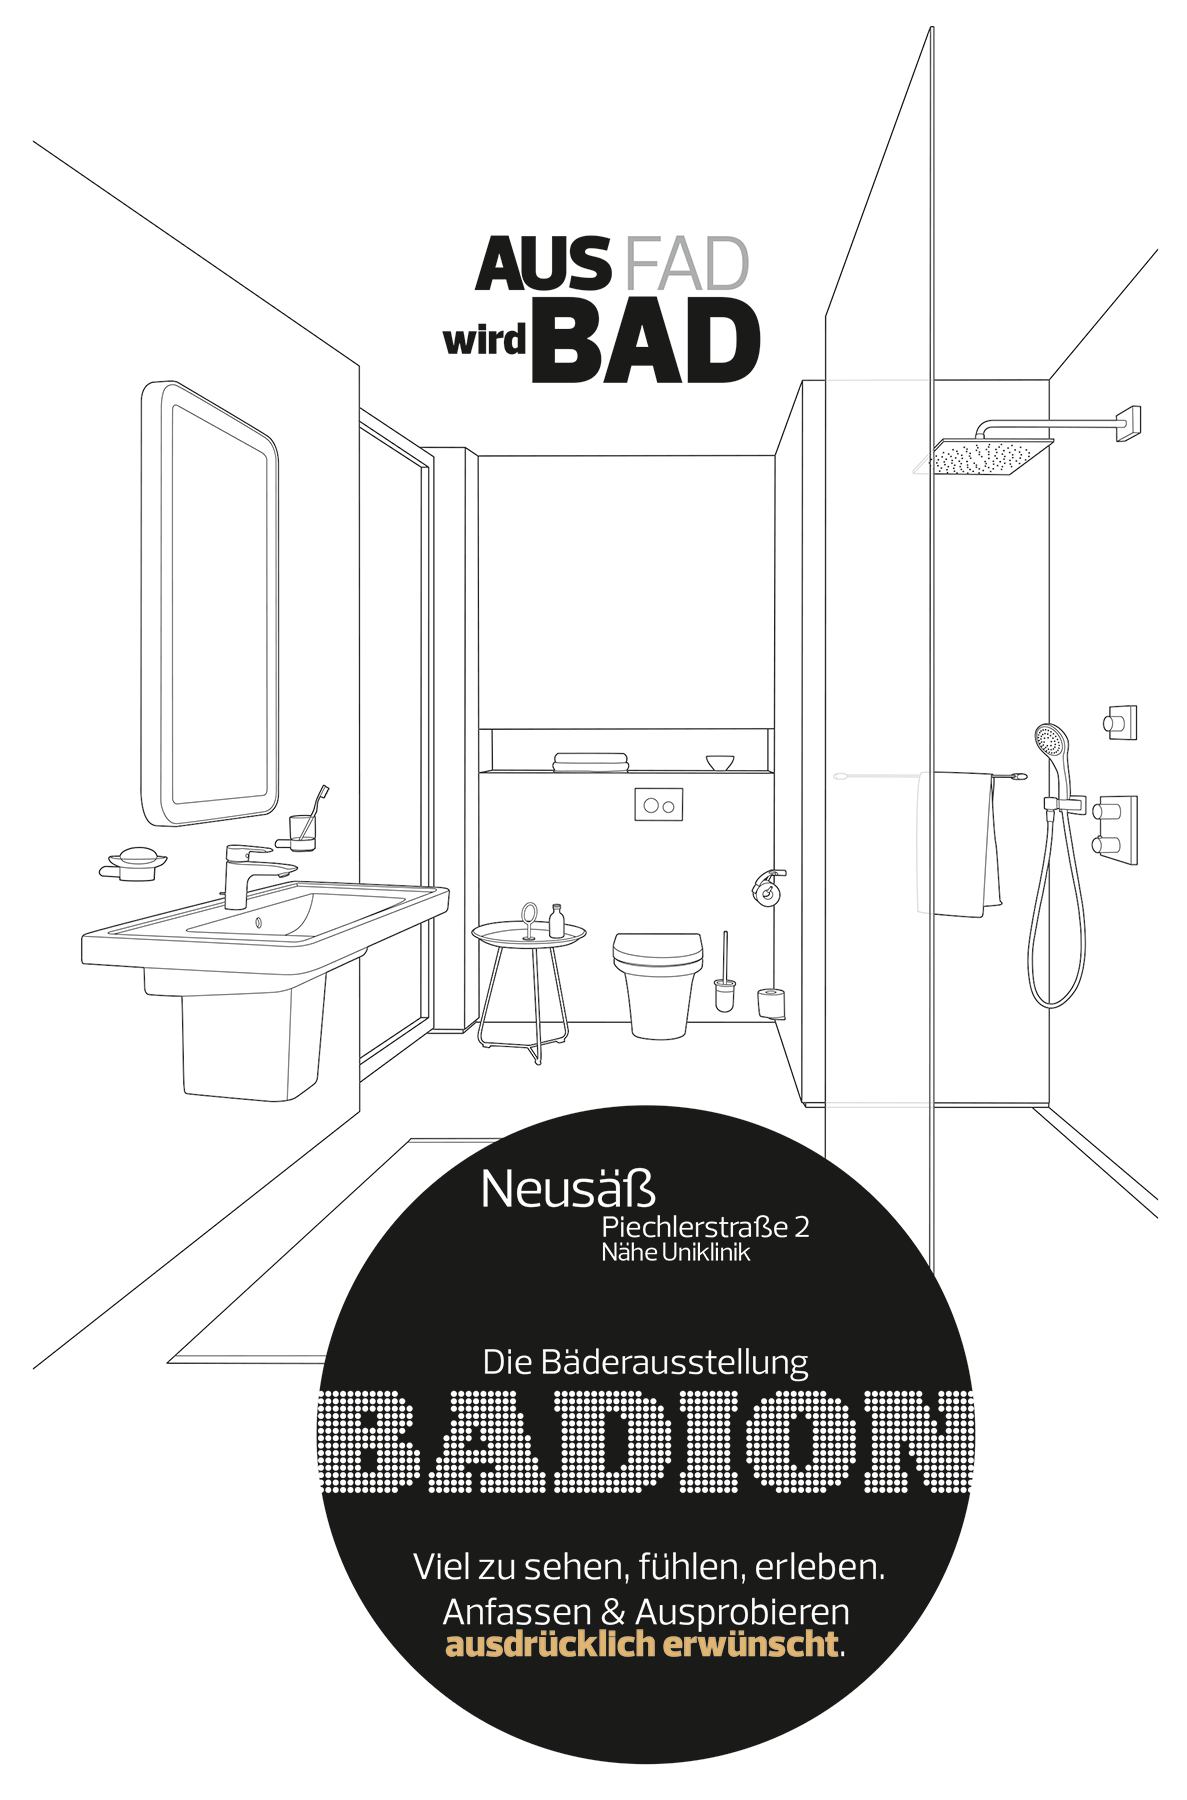 BADION Badezimmer Ausstellung Zitzelsberger